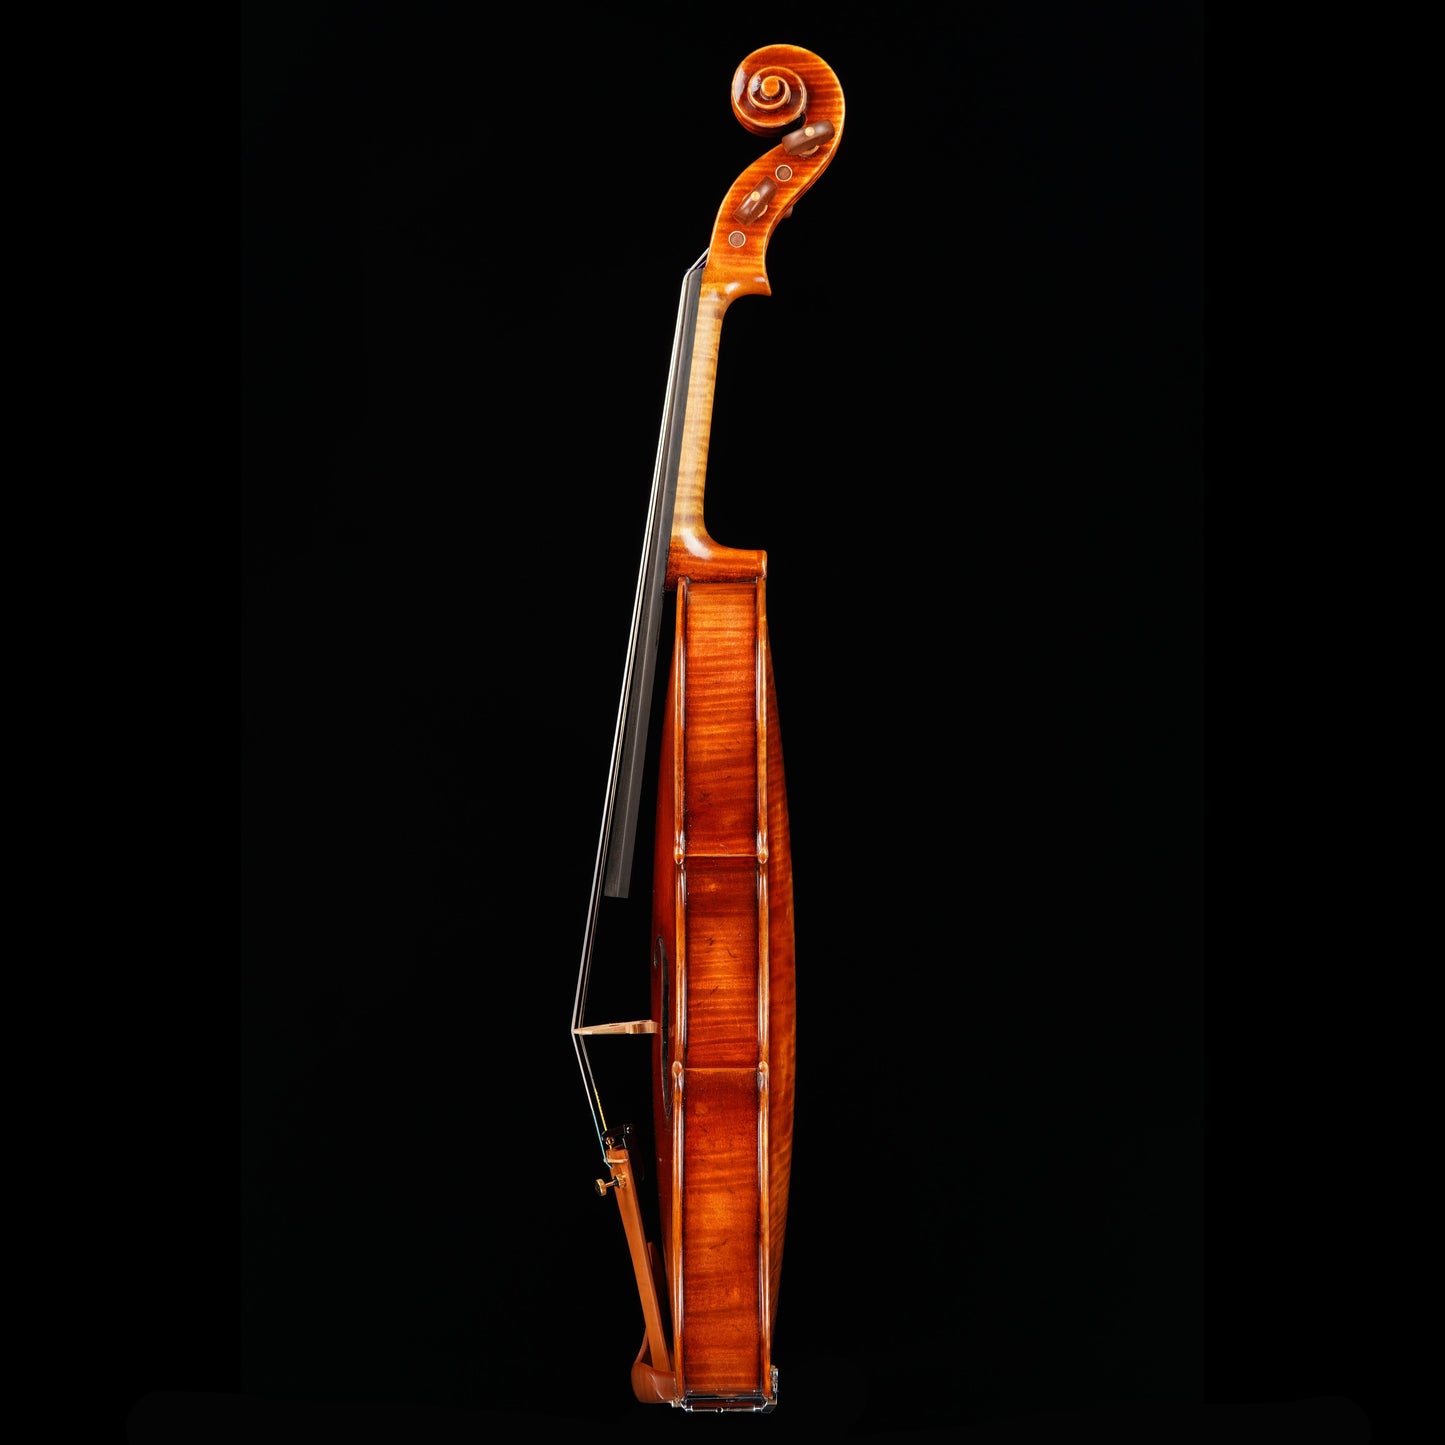 Ming Jiang Zhu MJ-700 "Principal Soloist" Violin